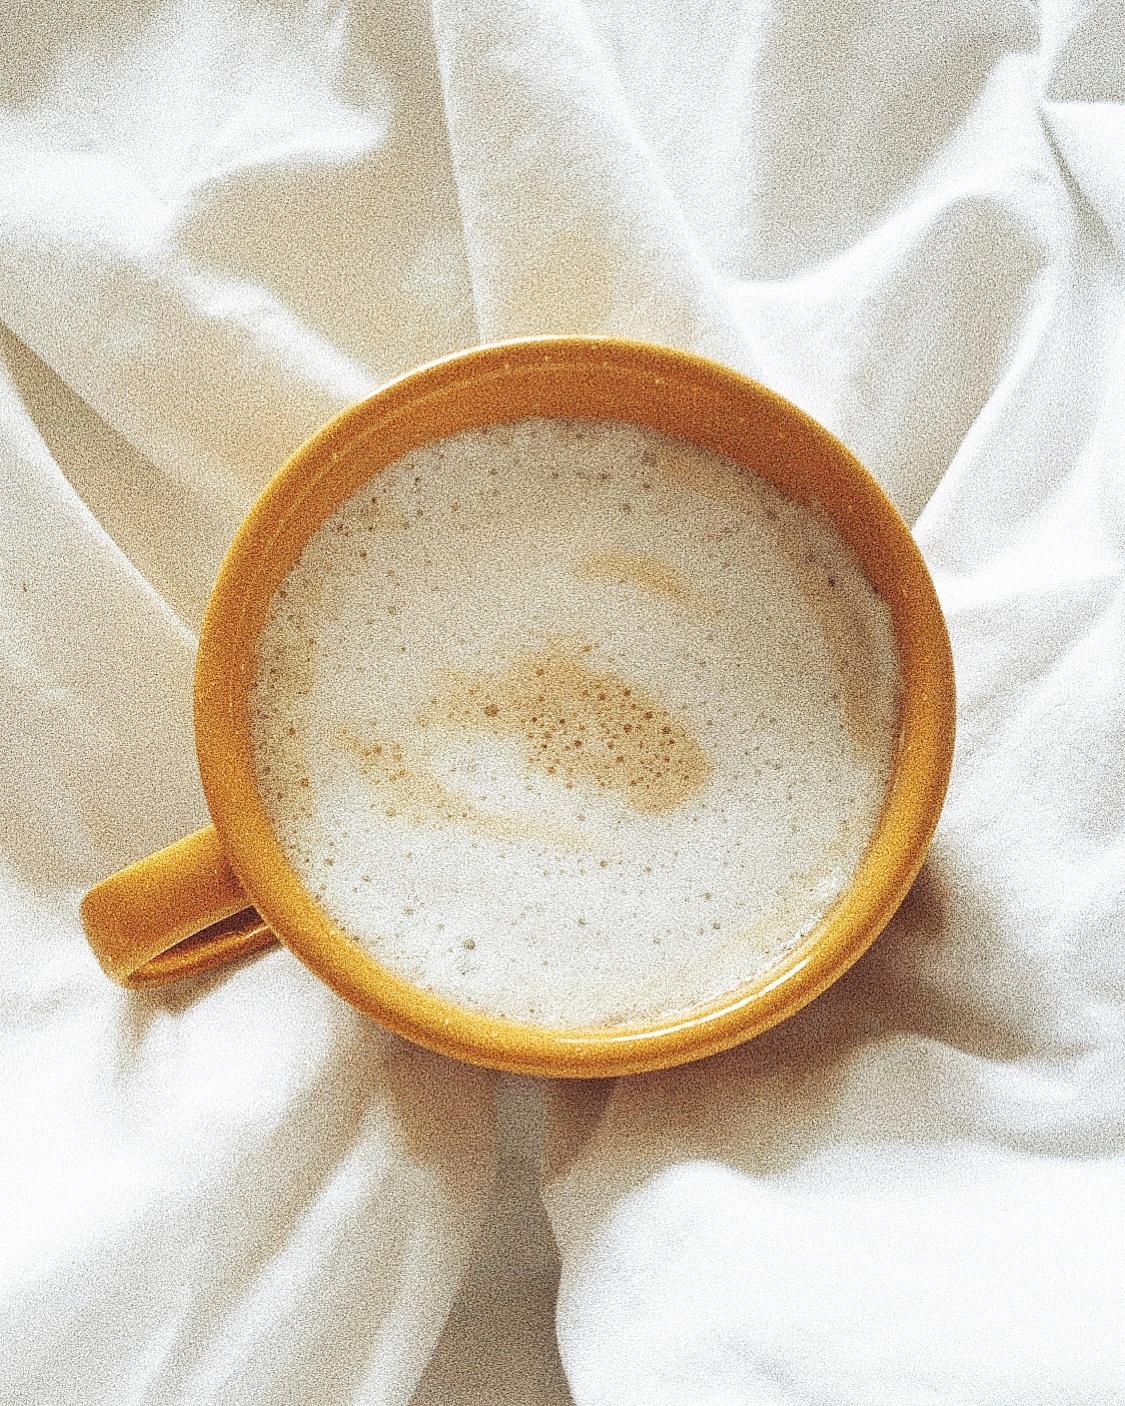 Samstagmorgen. ☕️ #coffee #bedroom #weekend #goodmorning #cup